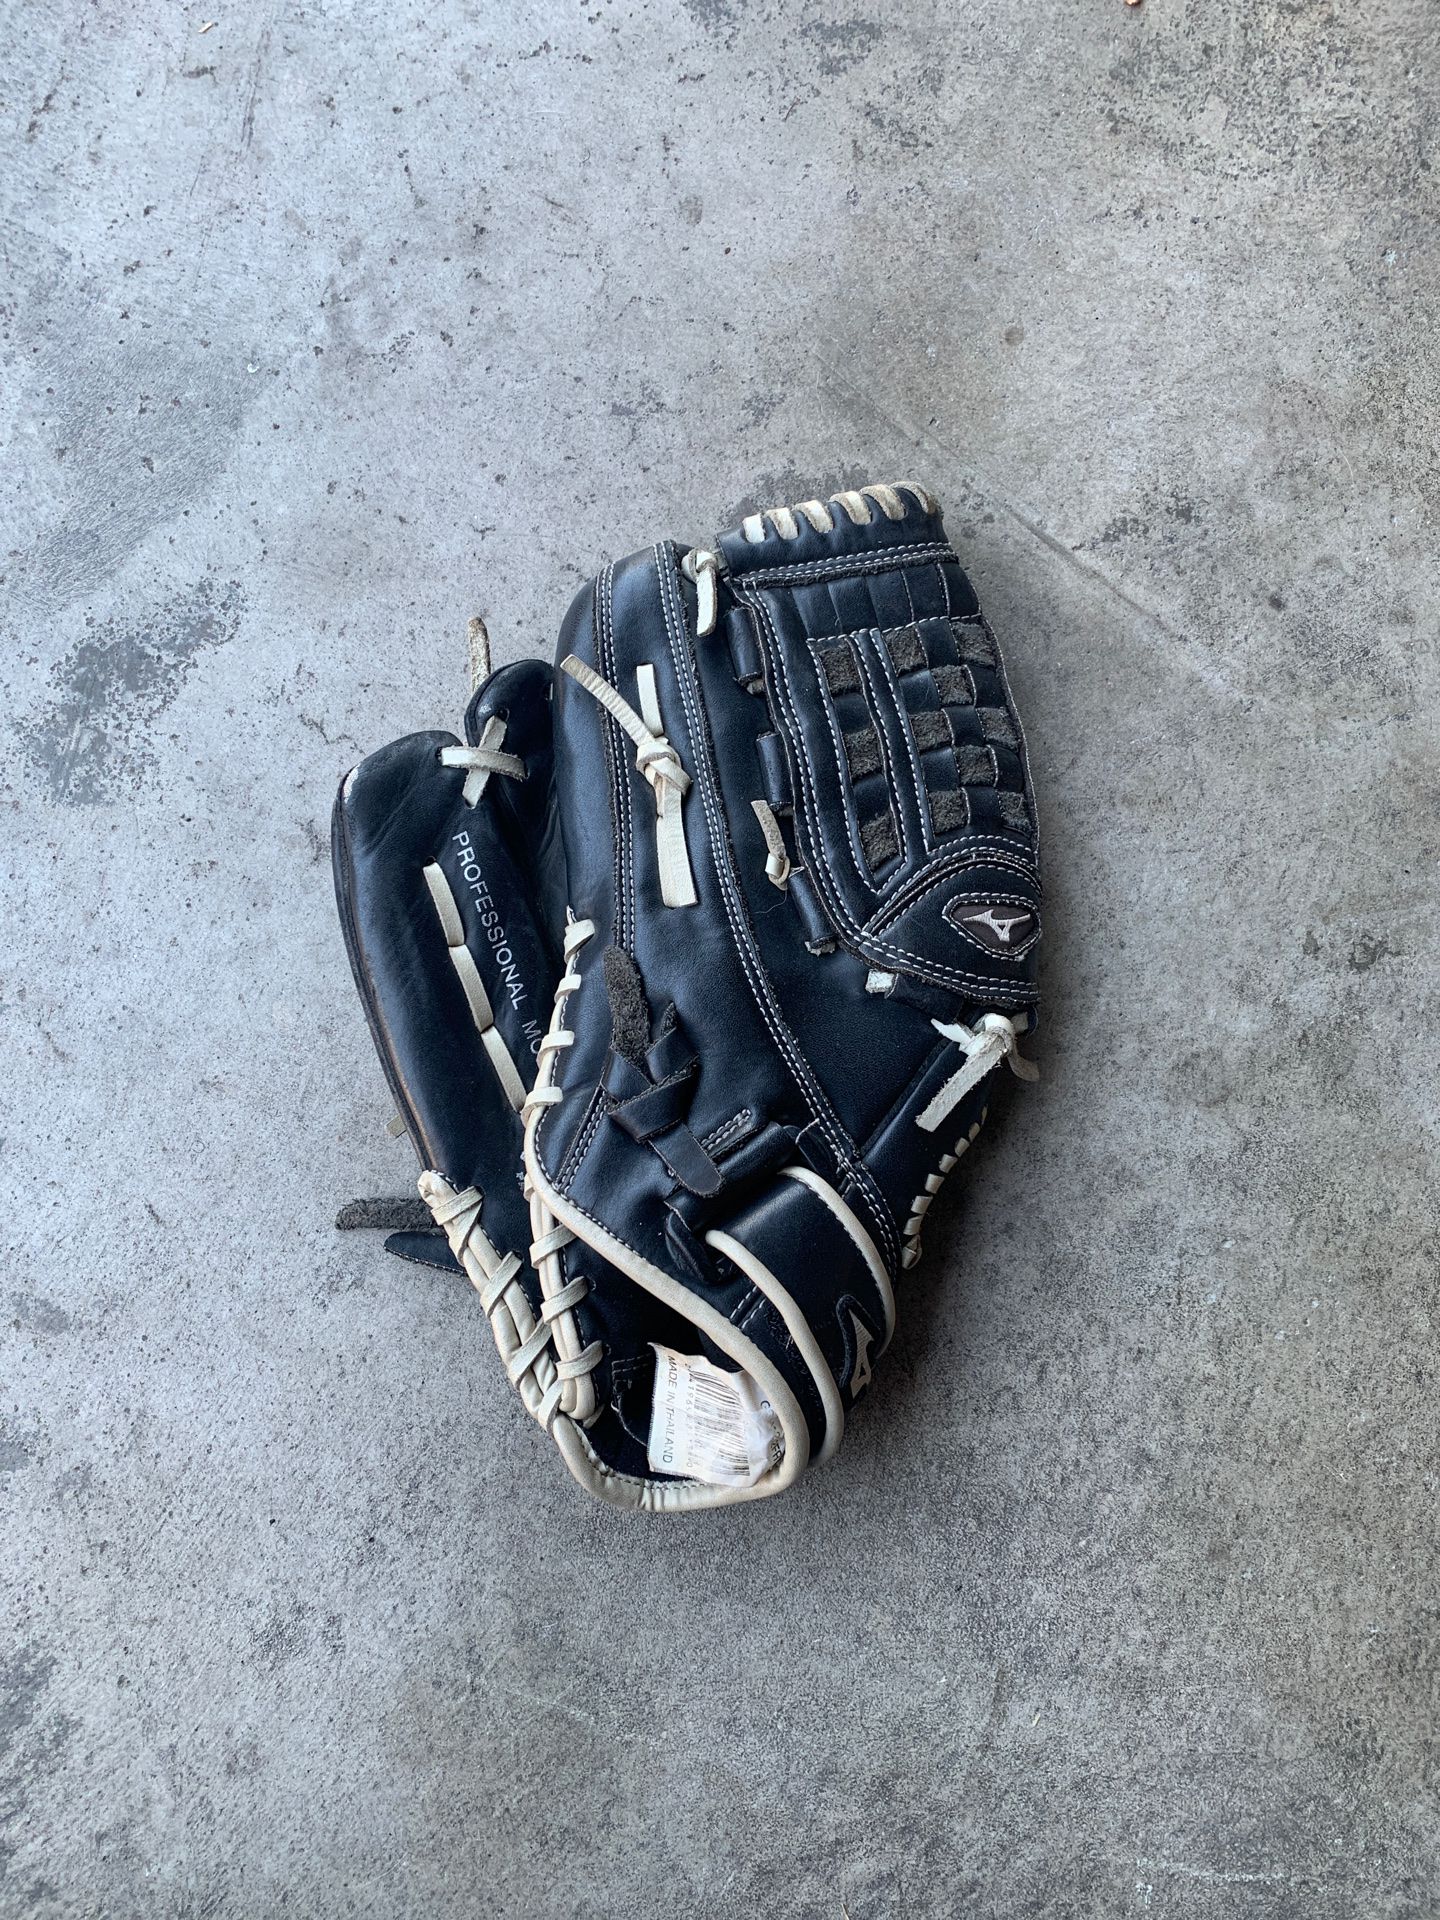 RARE LEFT HAND THROW- Mizuno Shadow Series 12.5" Baseball/Softball Glove